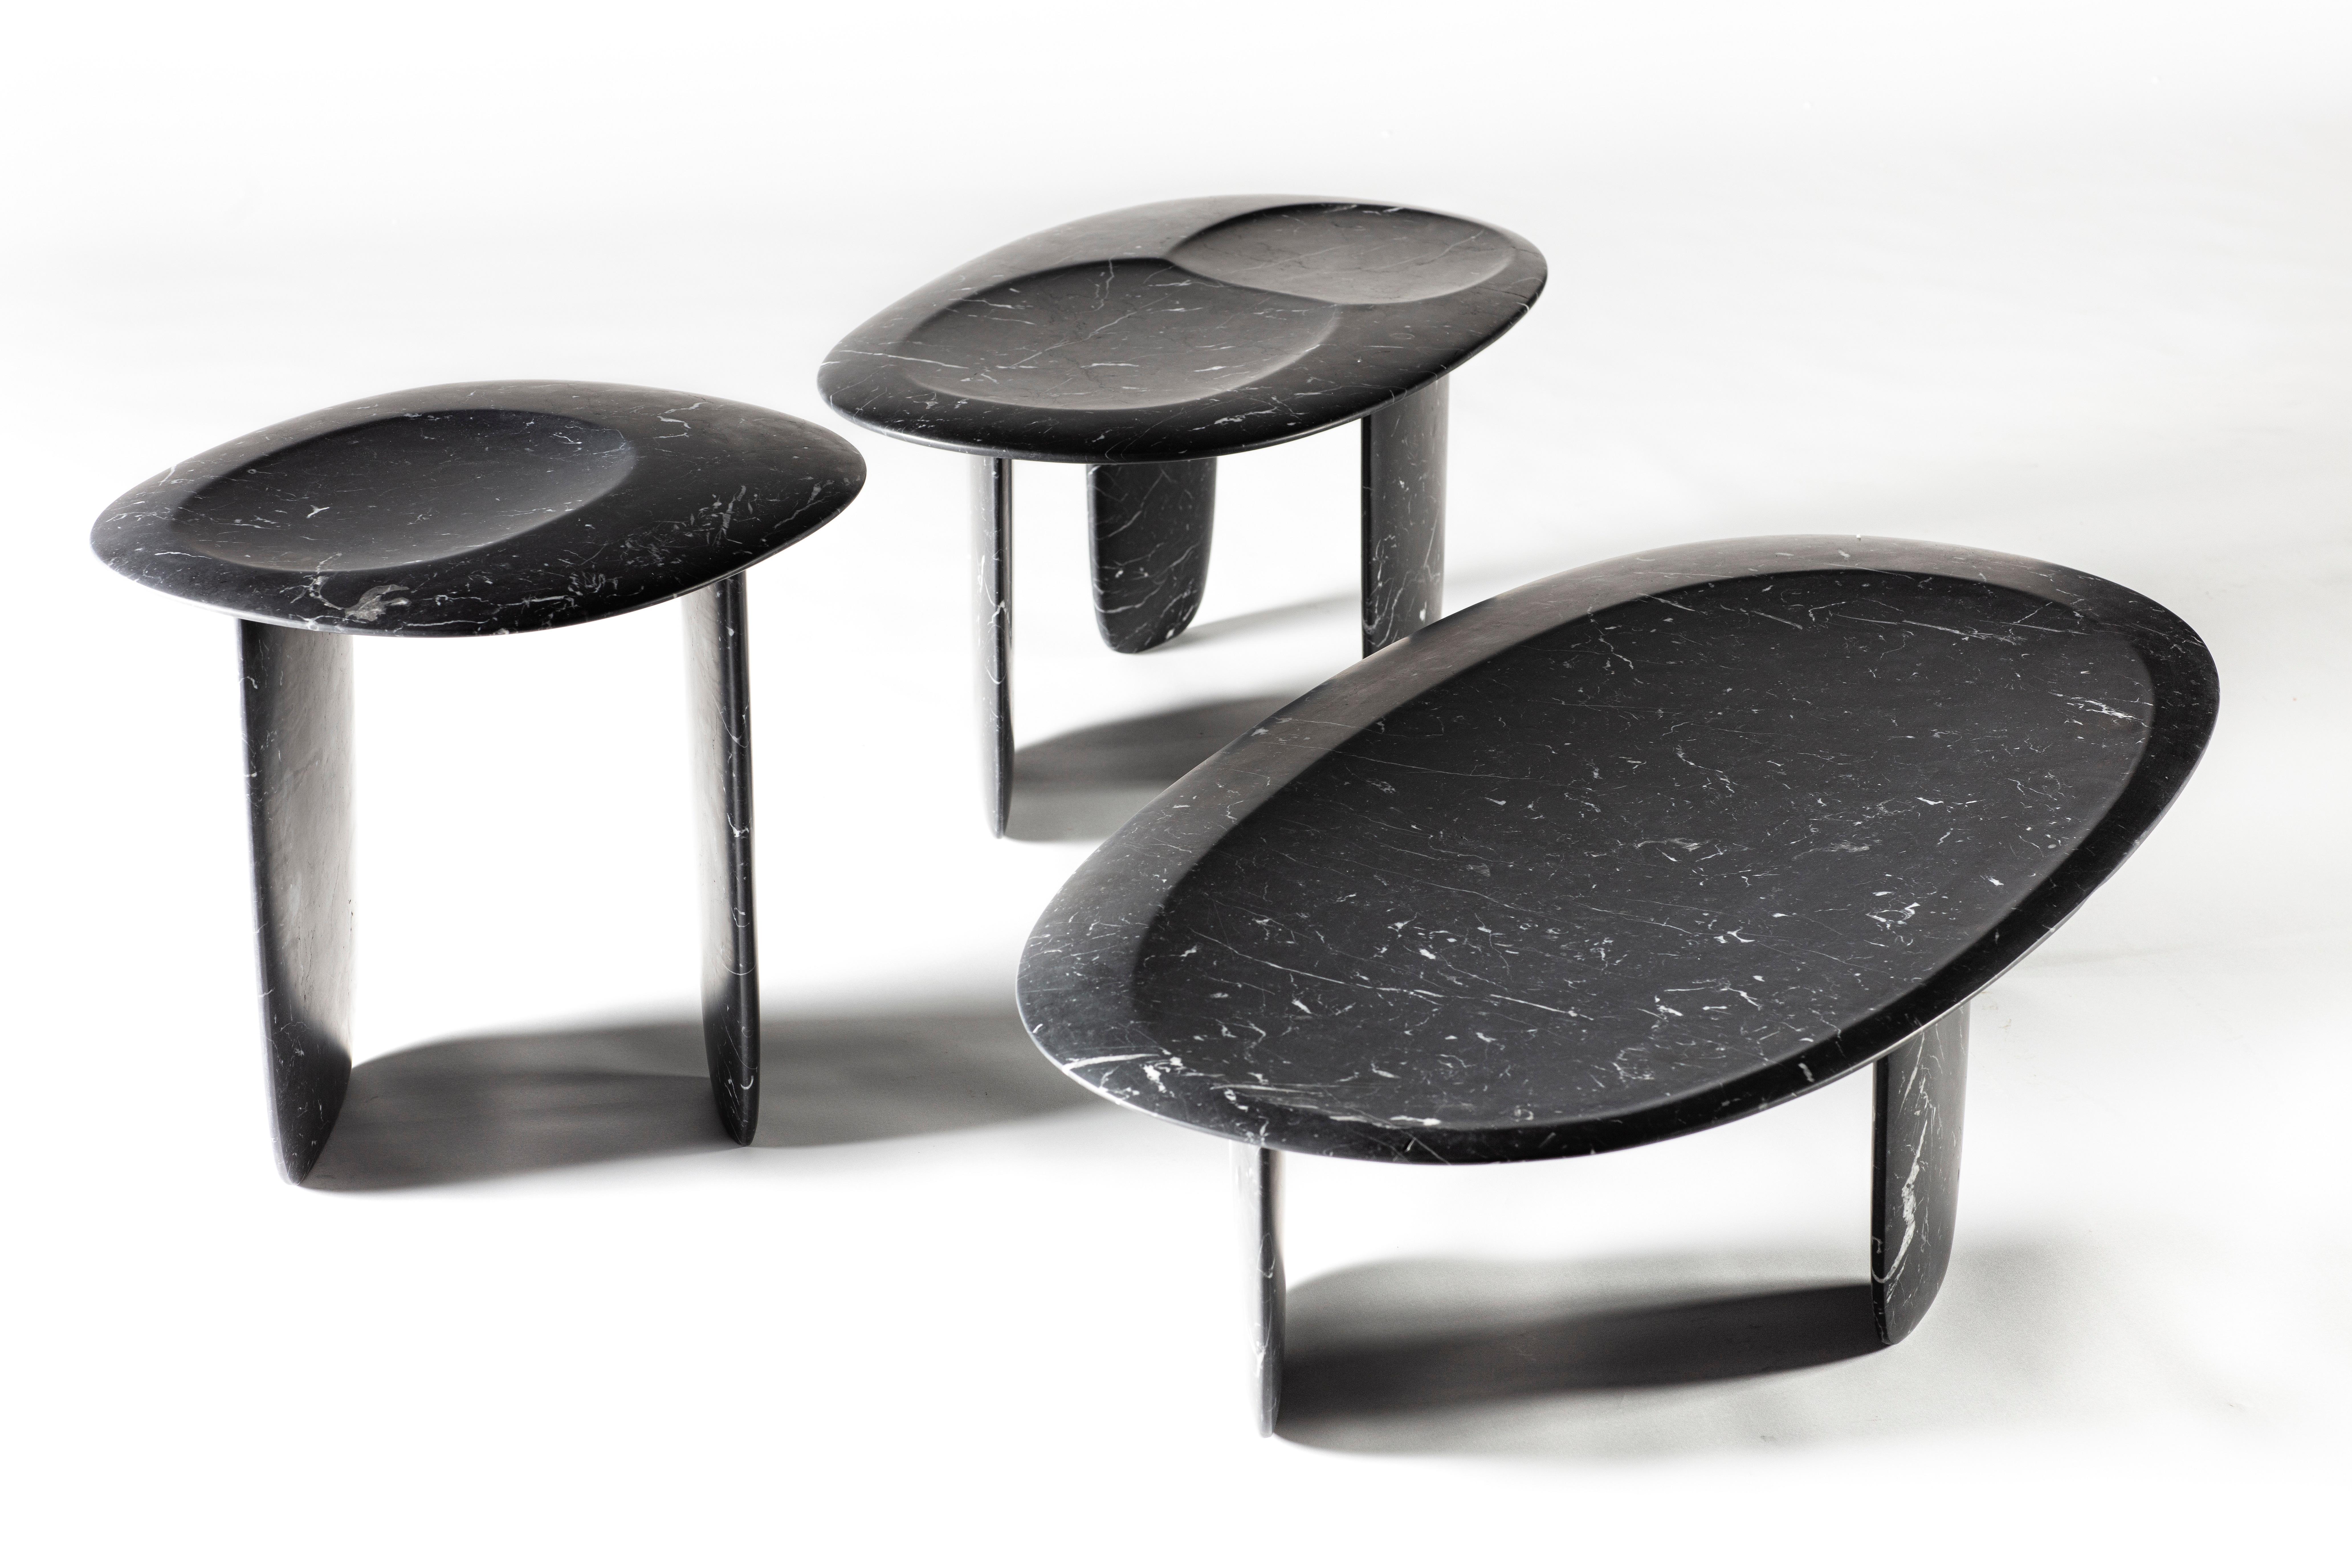 Sesi A, B, C set of number 3 coffee tables
Materials: Nero Marquinia, Bianco Carrara, Pietra Pece
Dimensions:
SESI A 100x50x H26 cm
SESI B 65x40x H32 cm
SESI C 45x40x H40 cm.